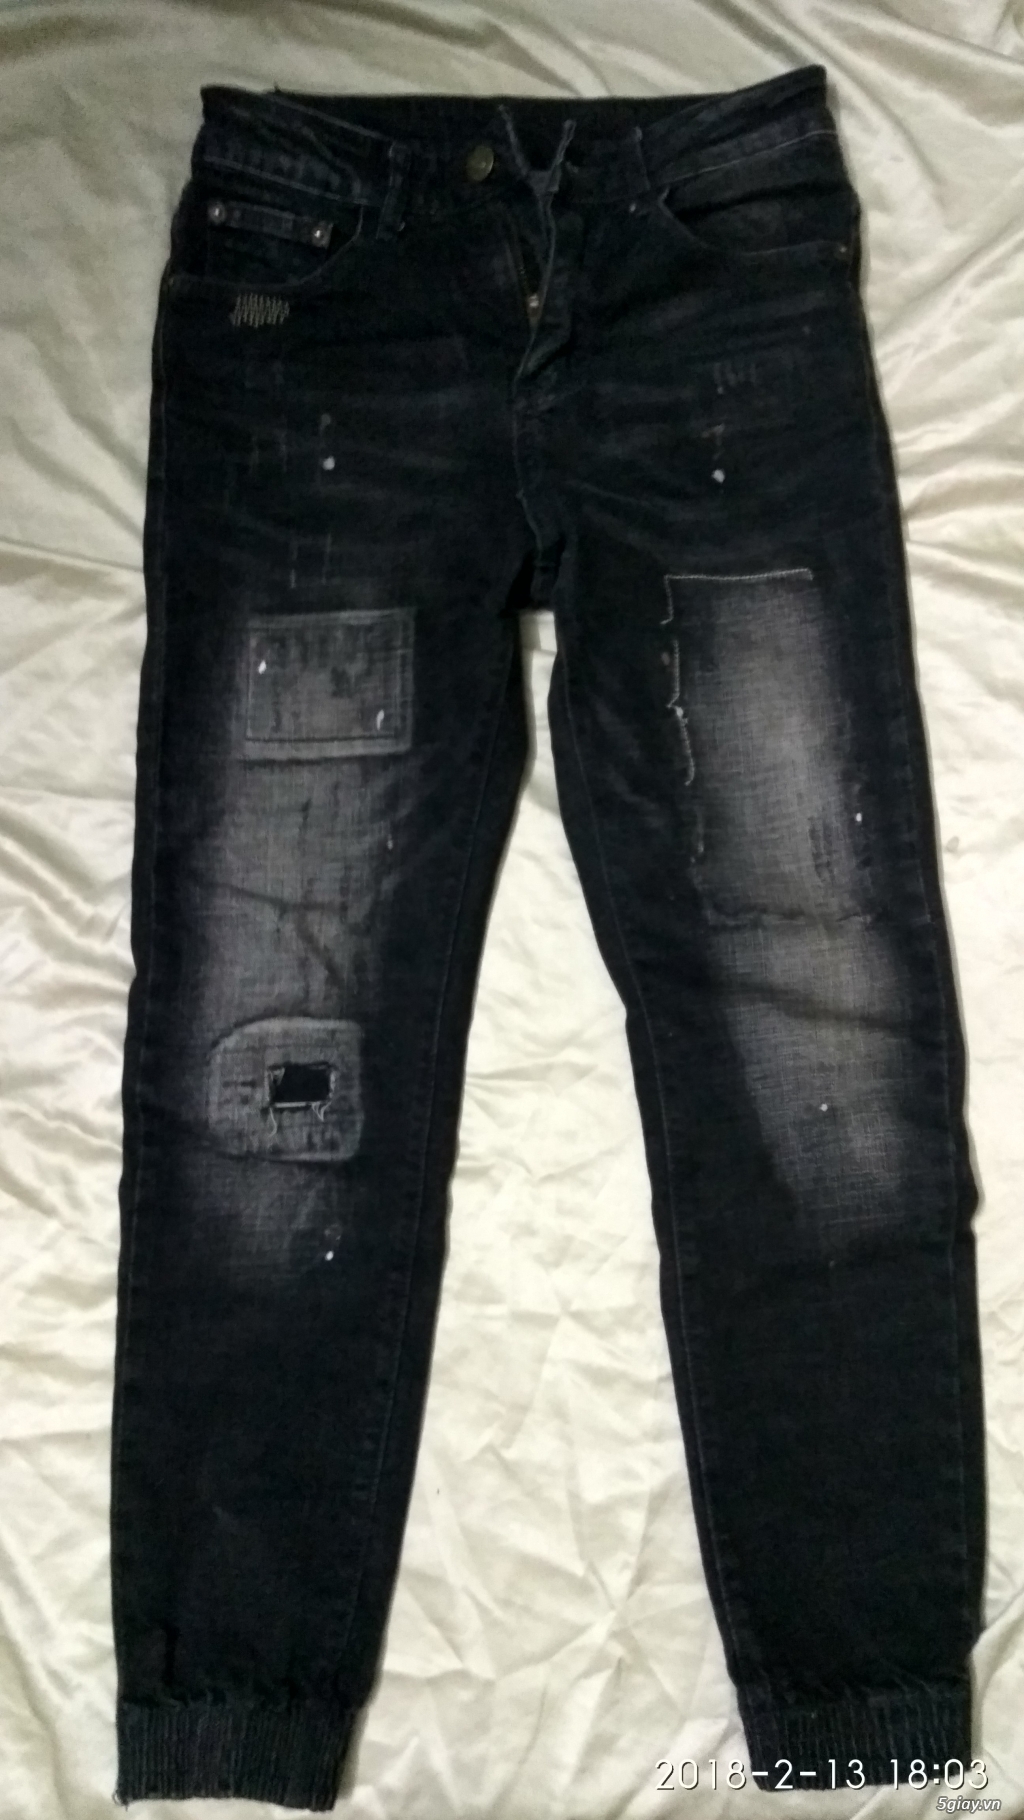 2 quần jeans nam size 29 giá bèo - 2